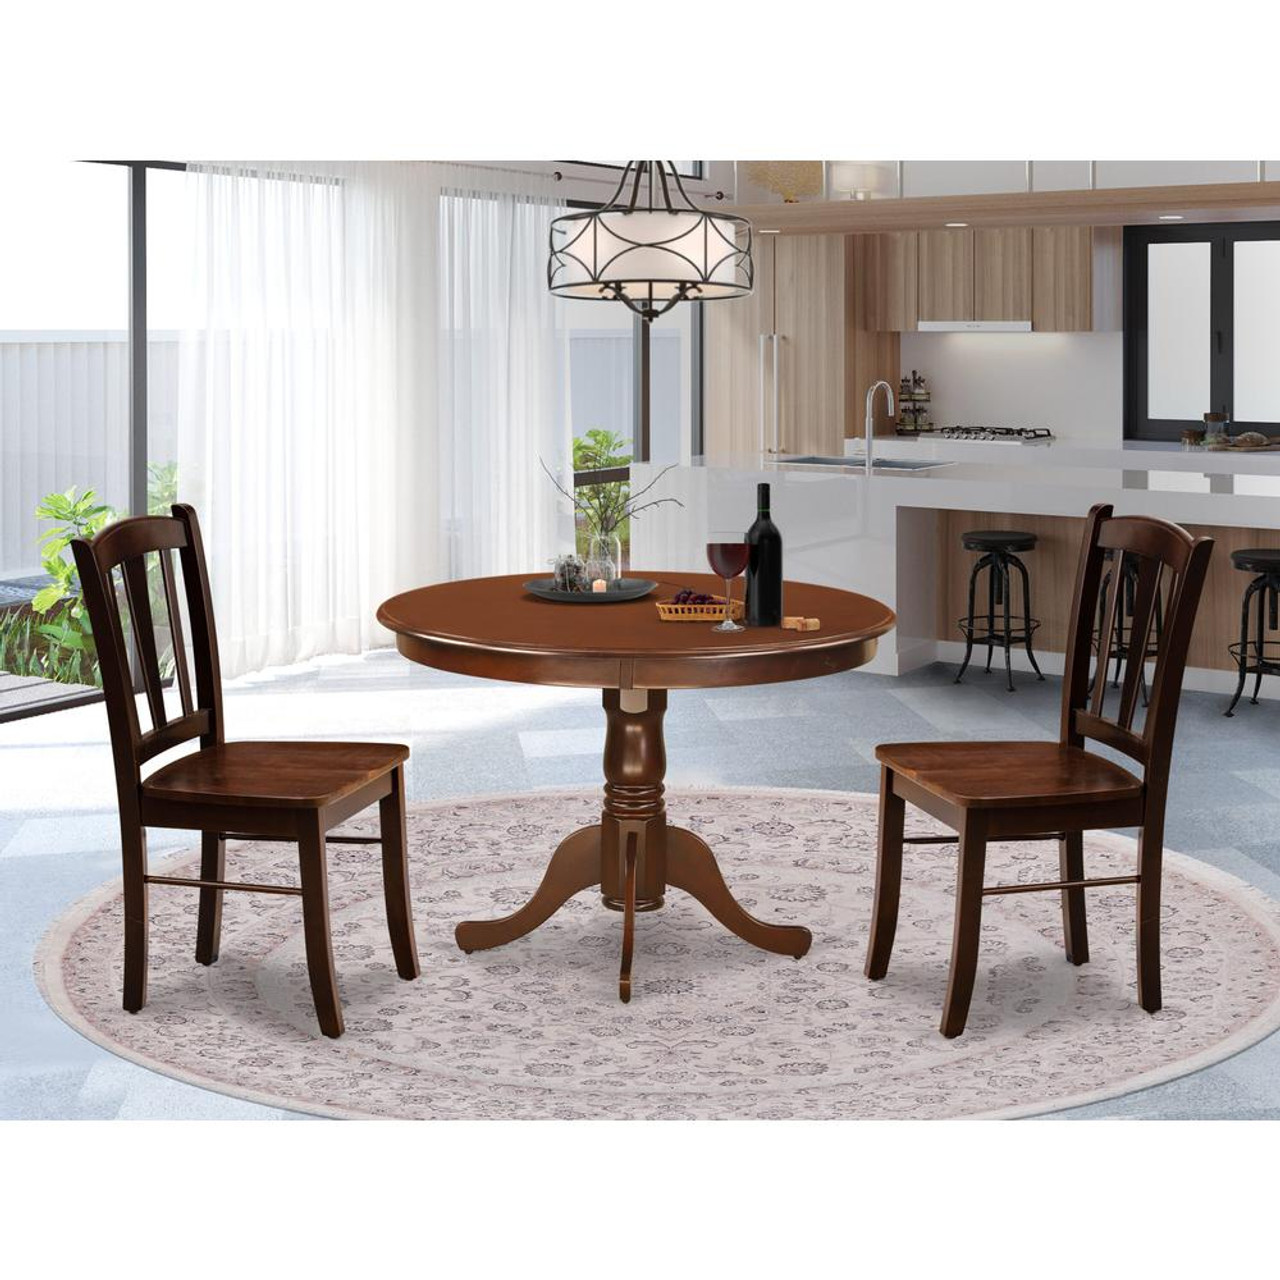 VIDEVECKMAL – ModerNash Furniture Supply Corporation